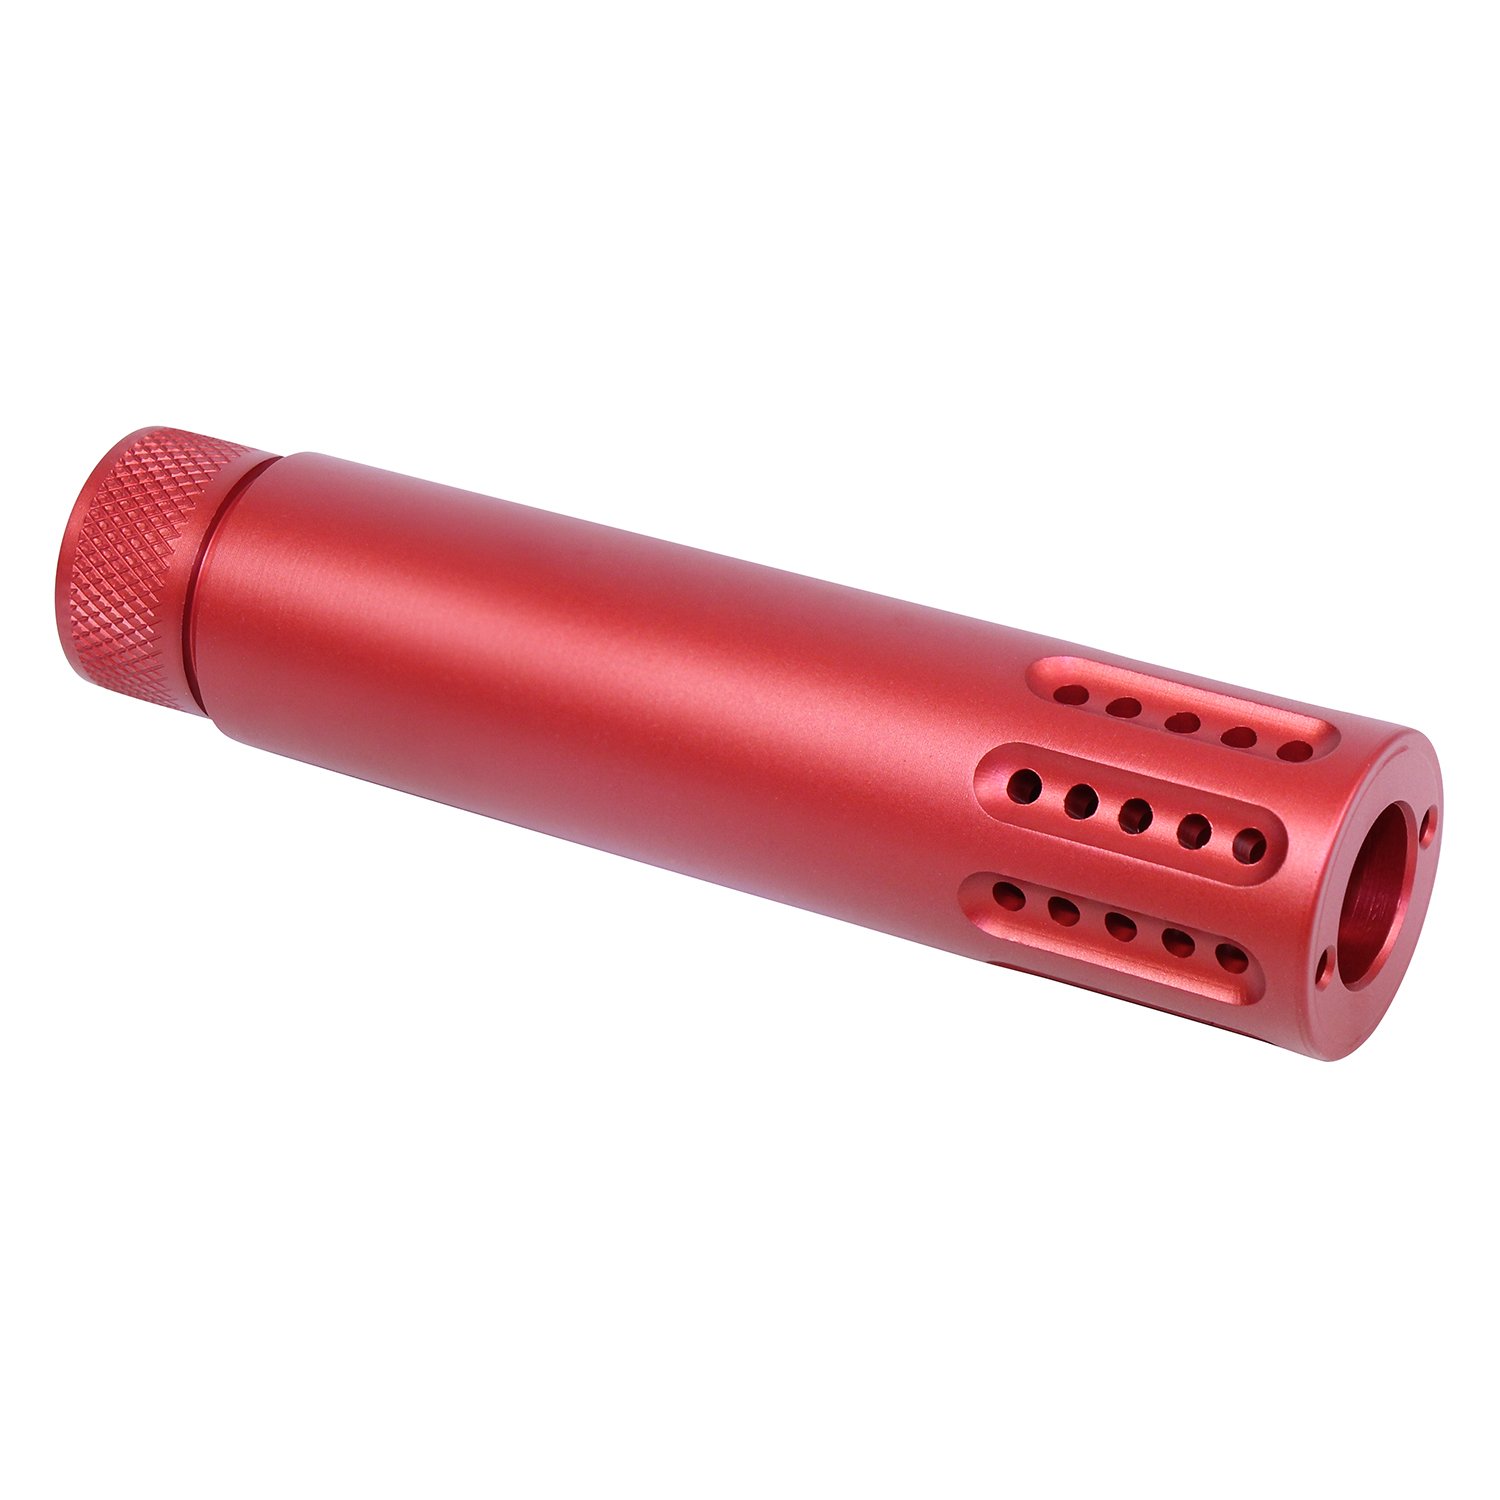 AR 308 caliber red anodized barrel shroud with muzzle brake.